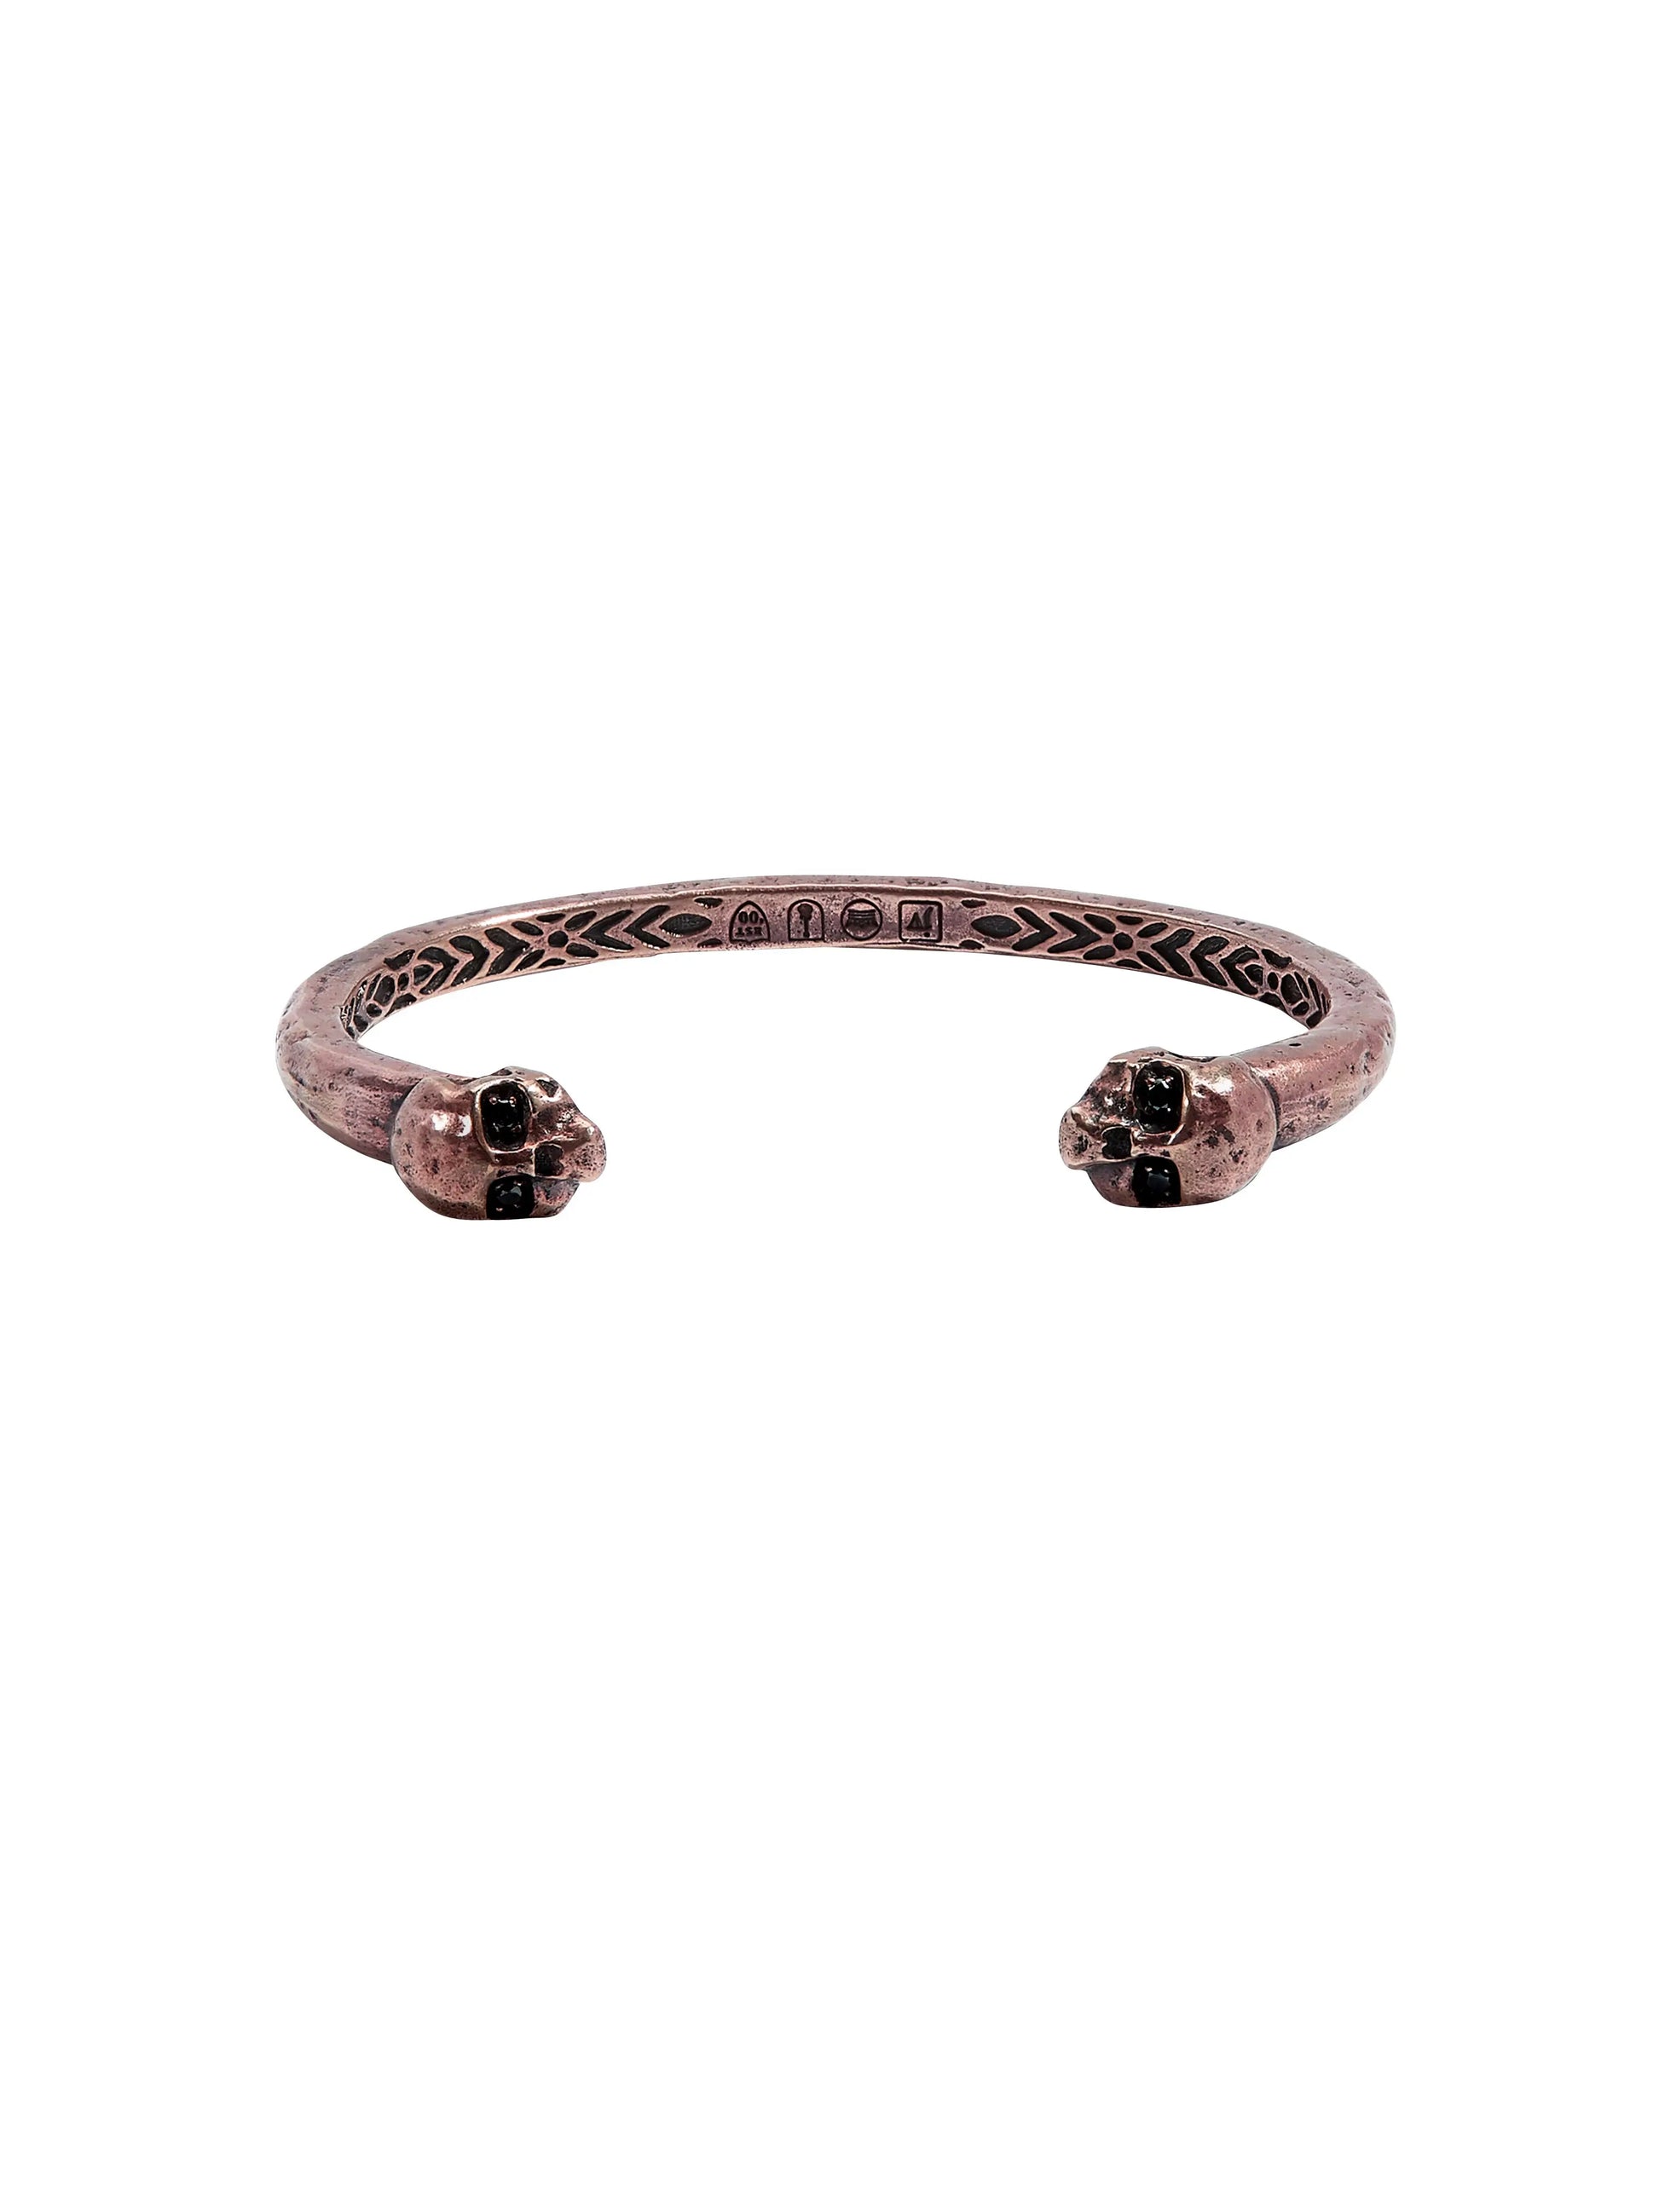 Brass Cuff Bracelet, Narrow, with Black Diamond - Squash Blossom Vail